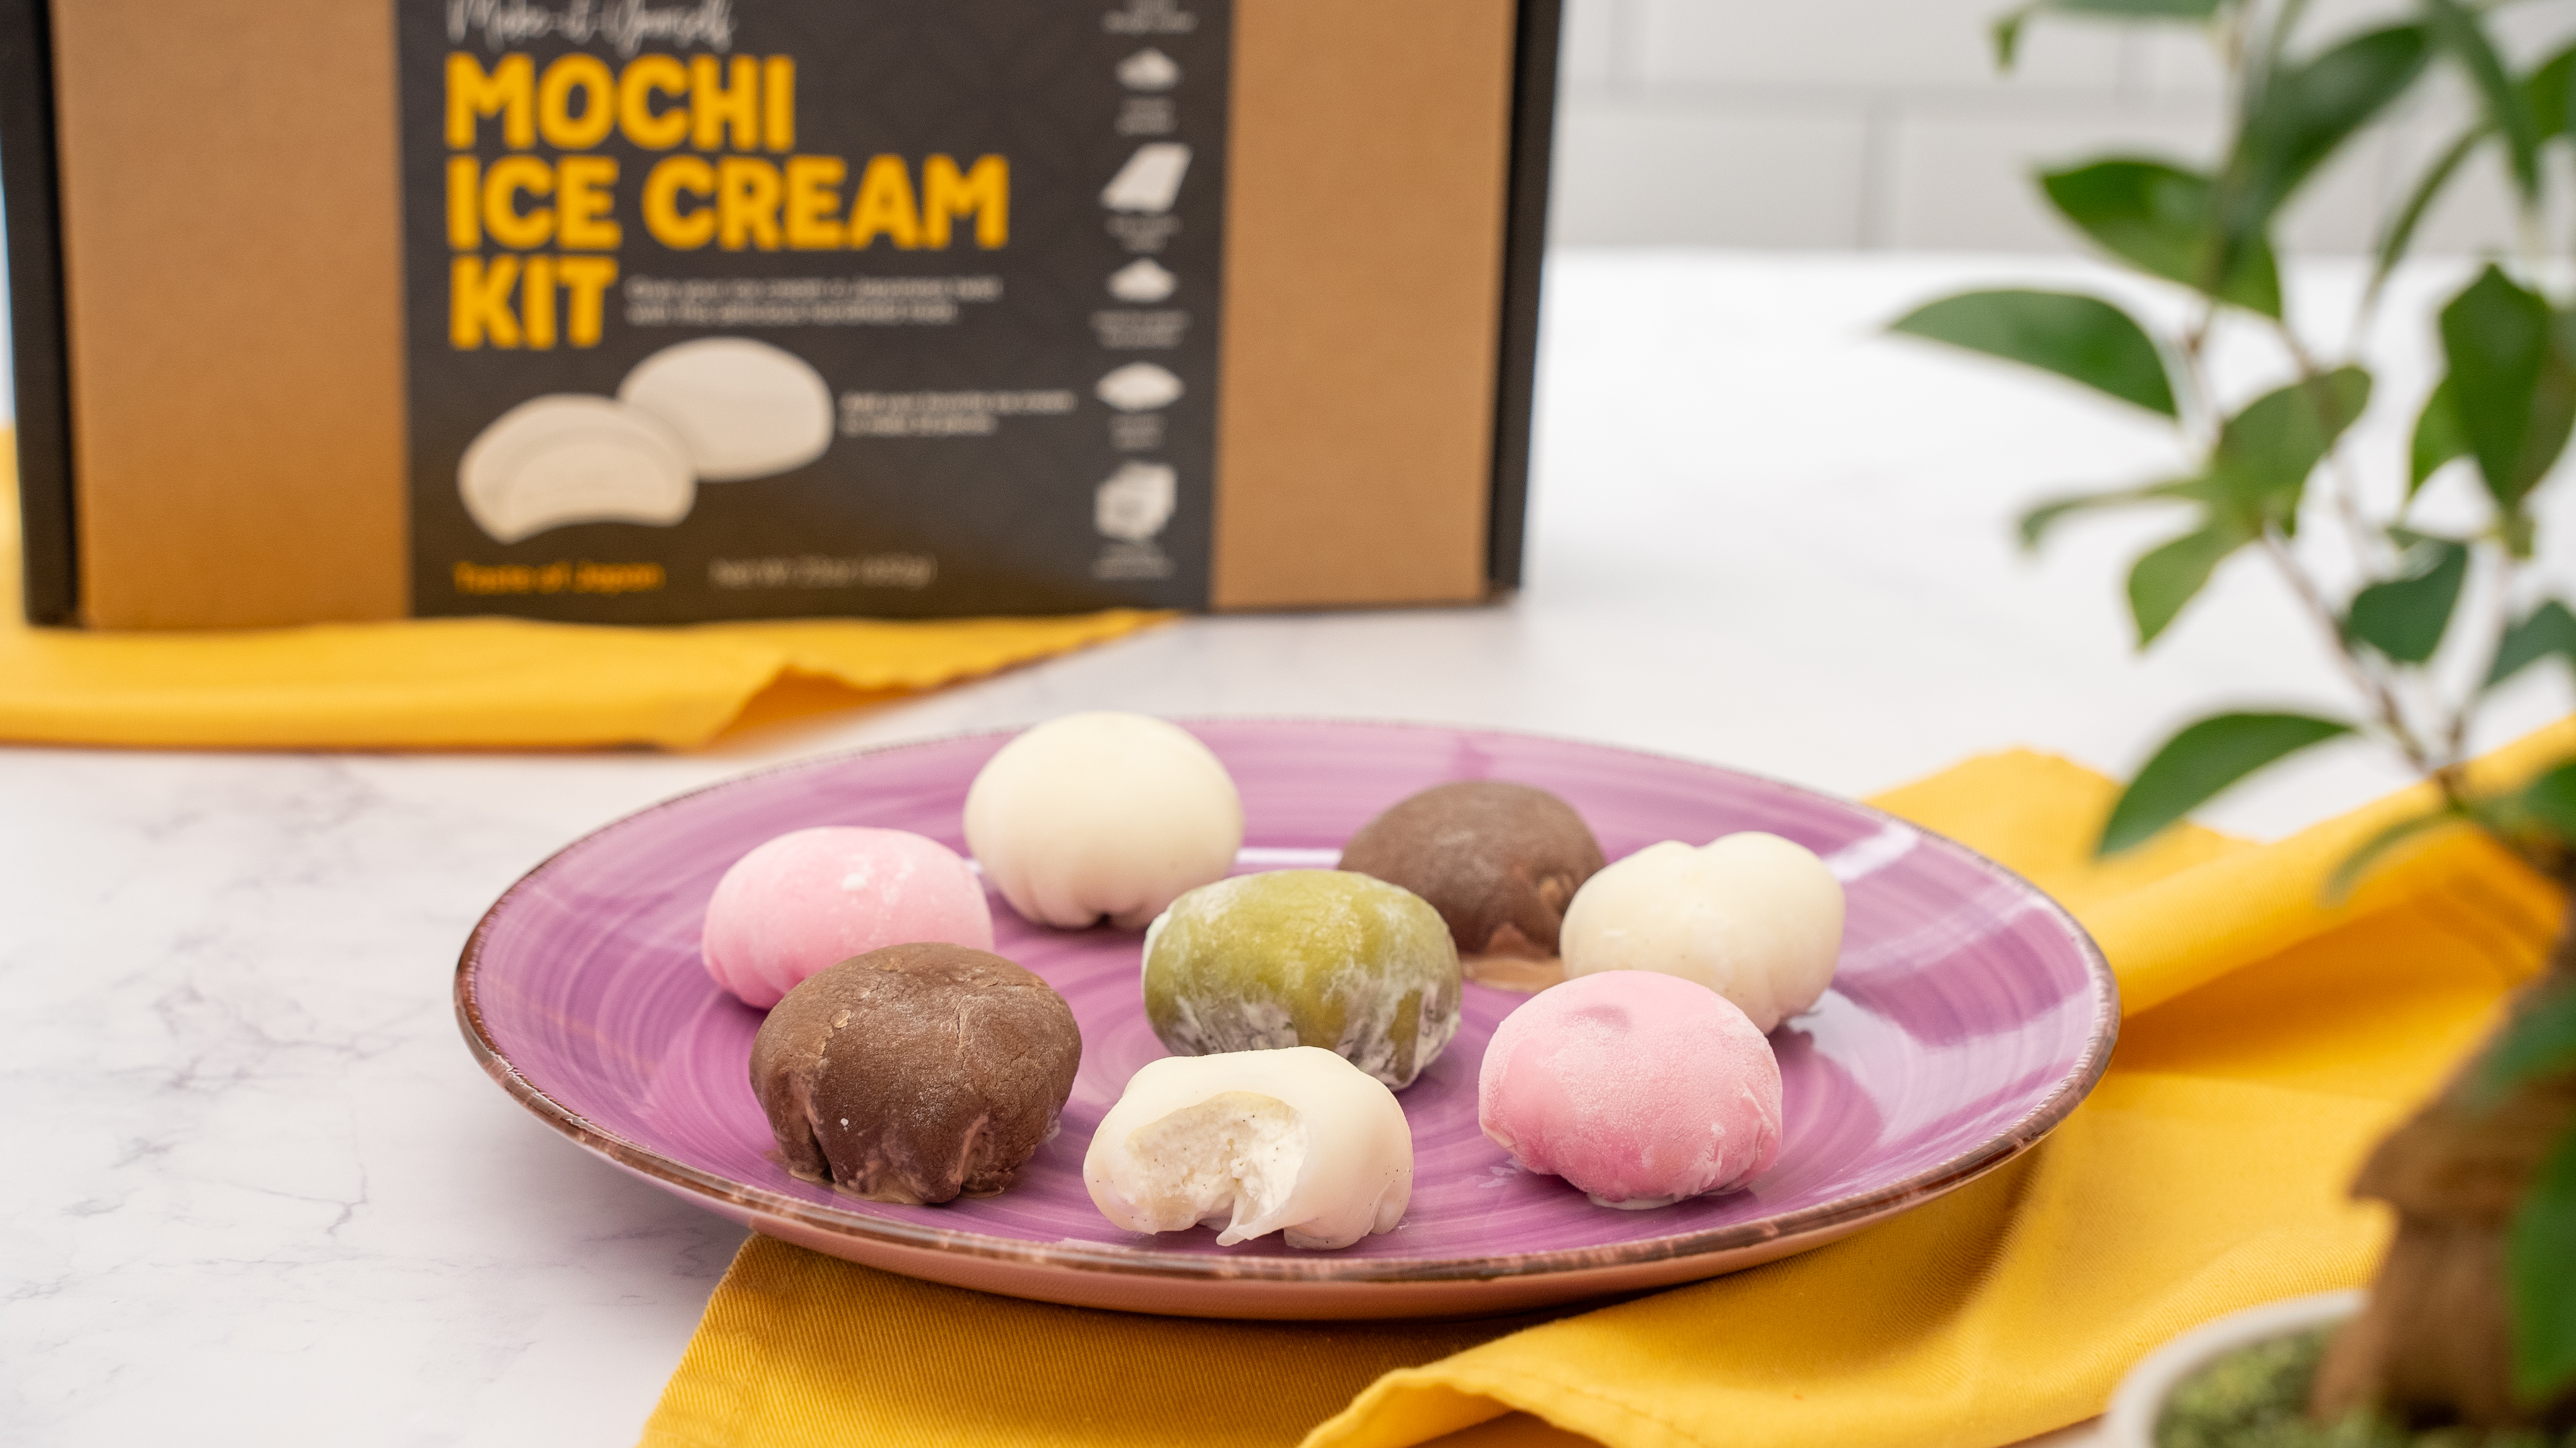 Mochi Ice Cream Class, Global Grub